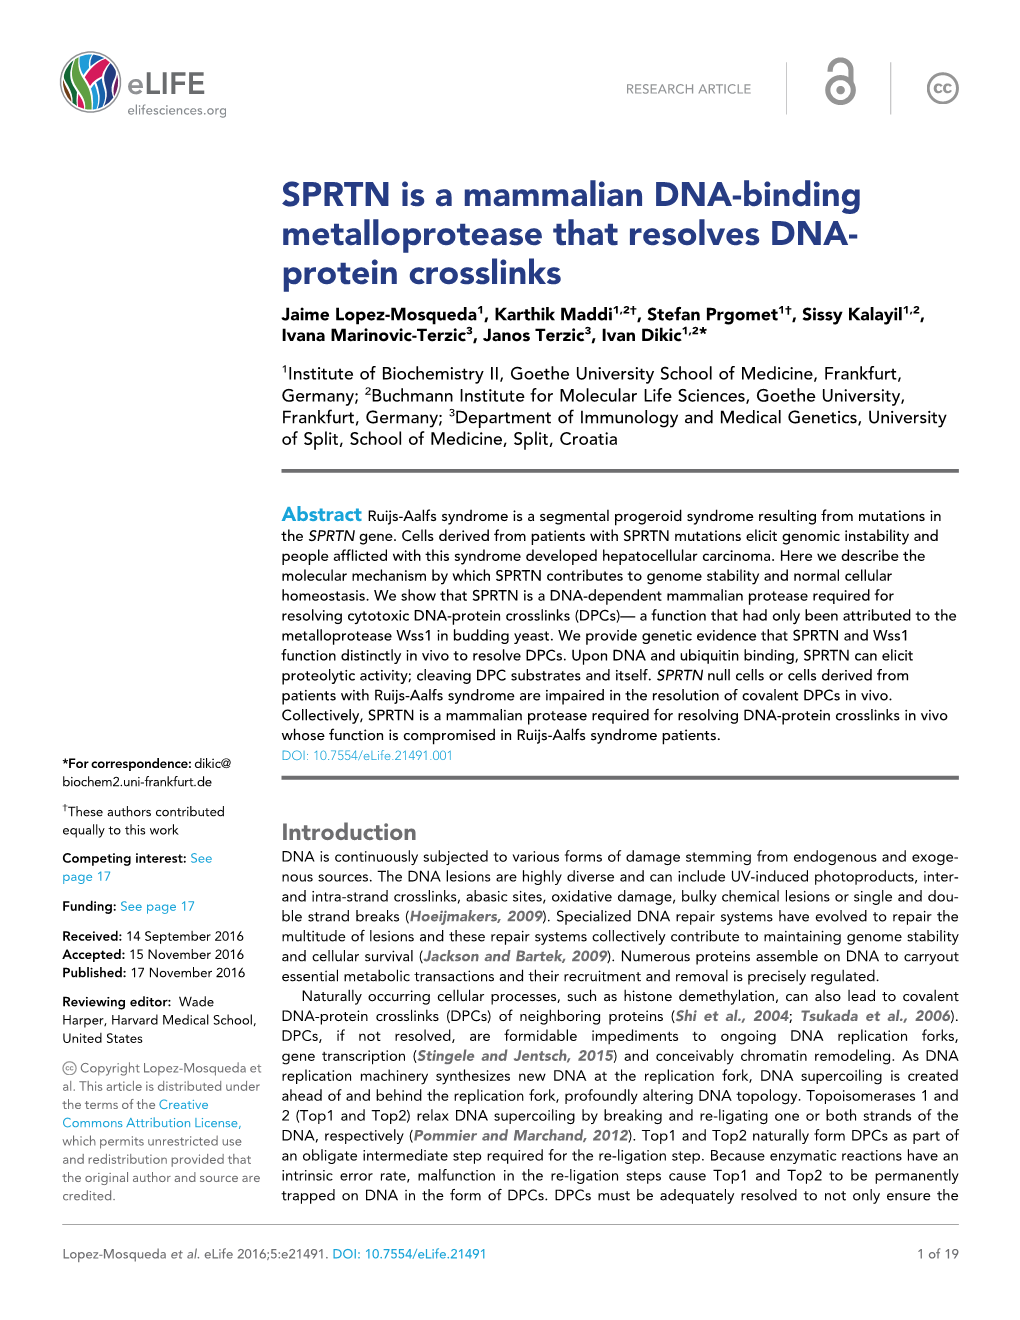 SPRTN Is a Mammalian DNA-Binding Metalloprotease That Resolves DNA